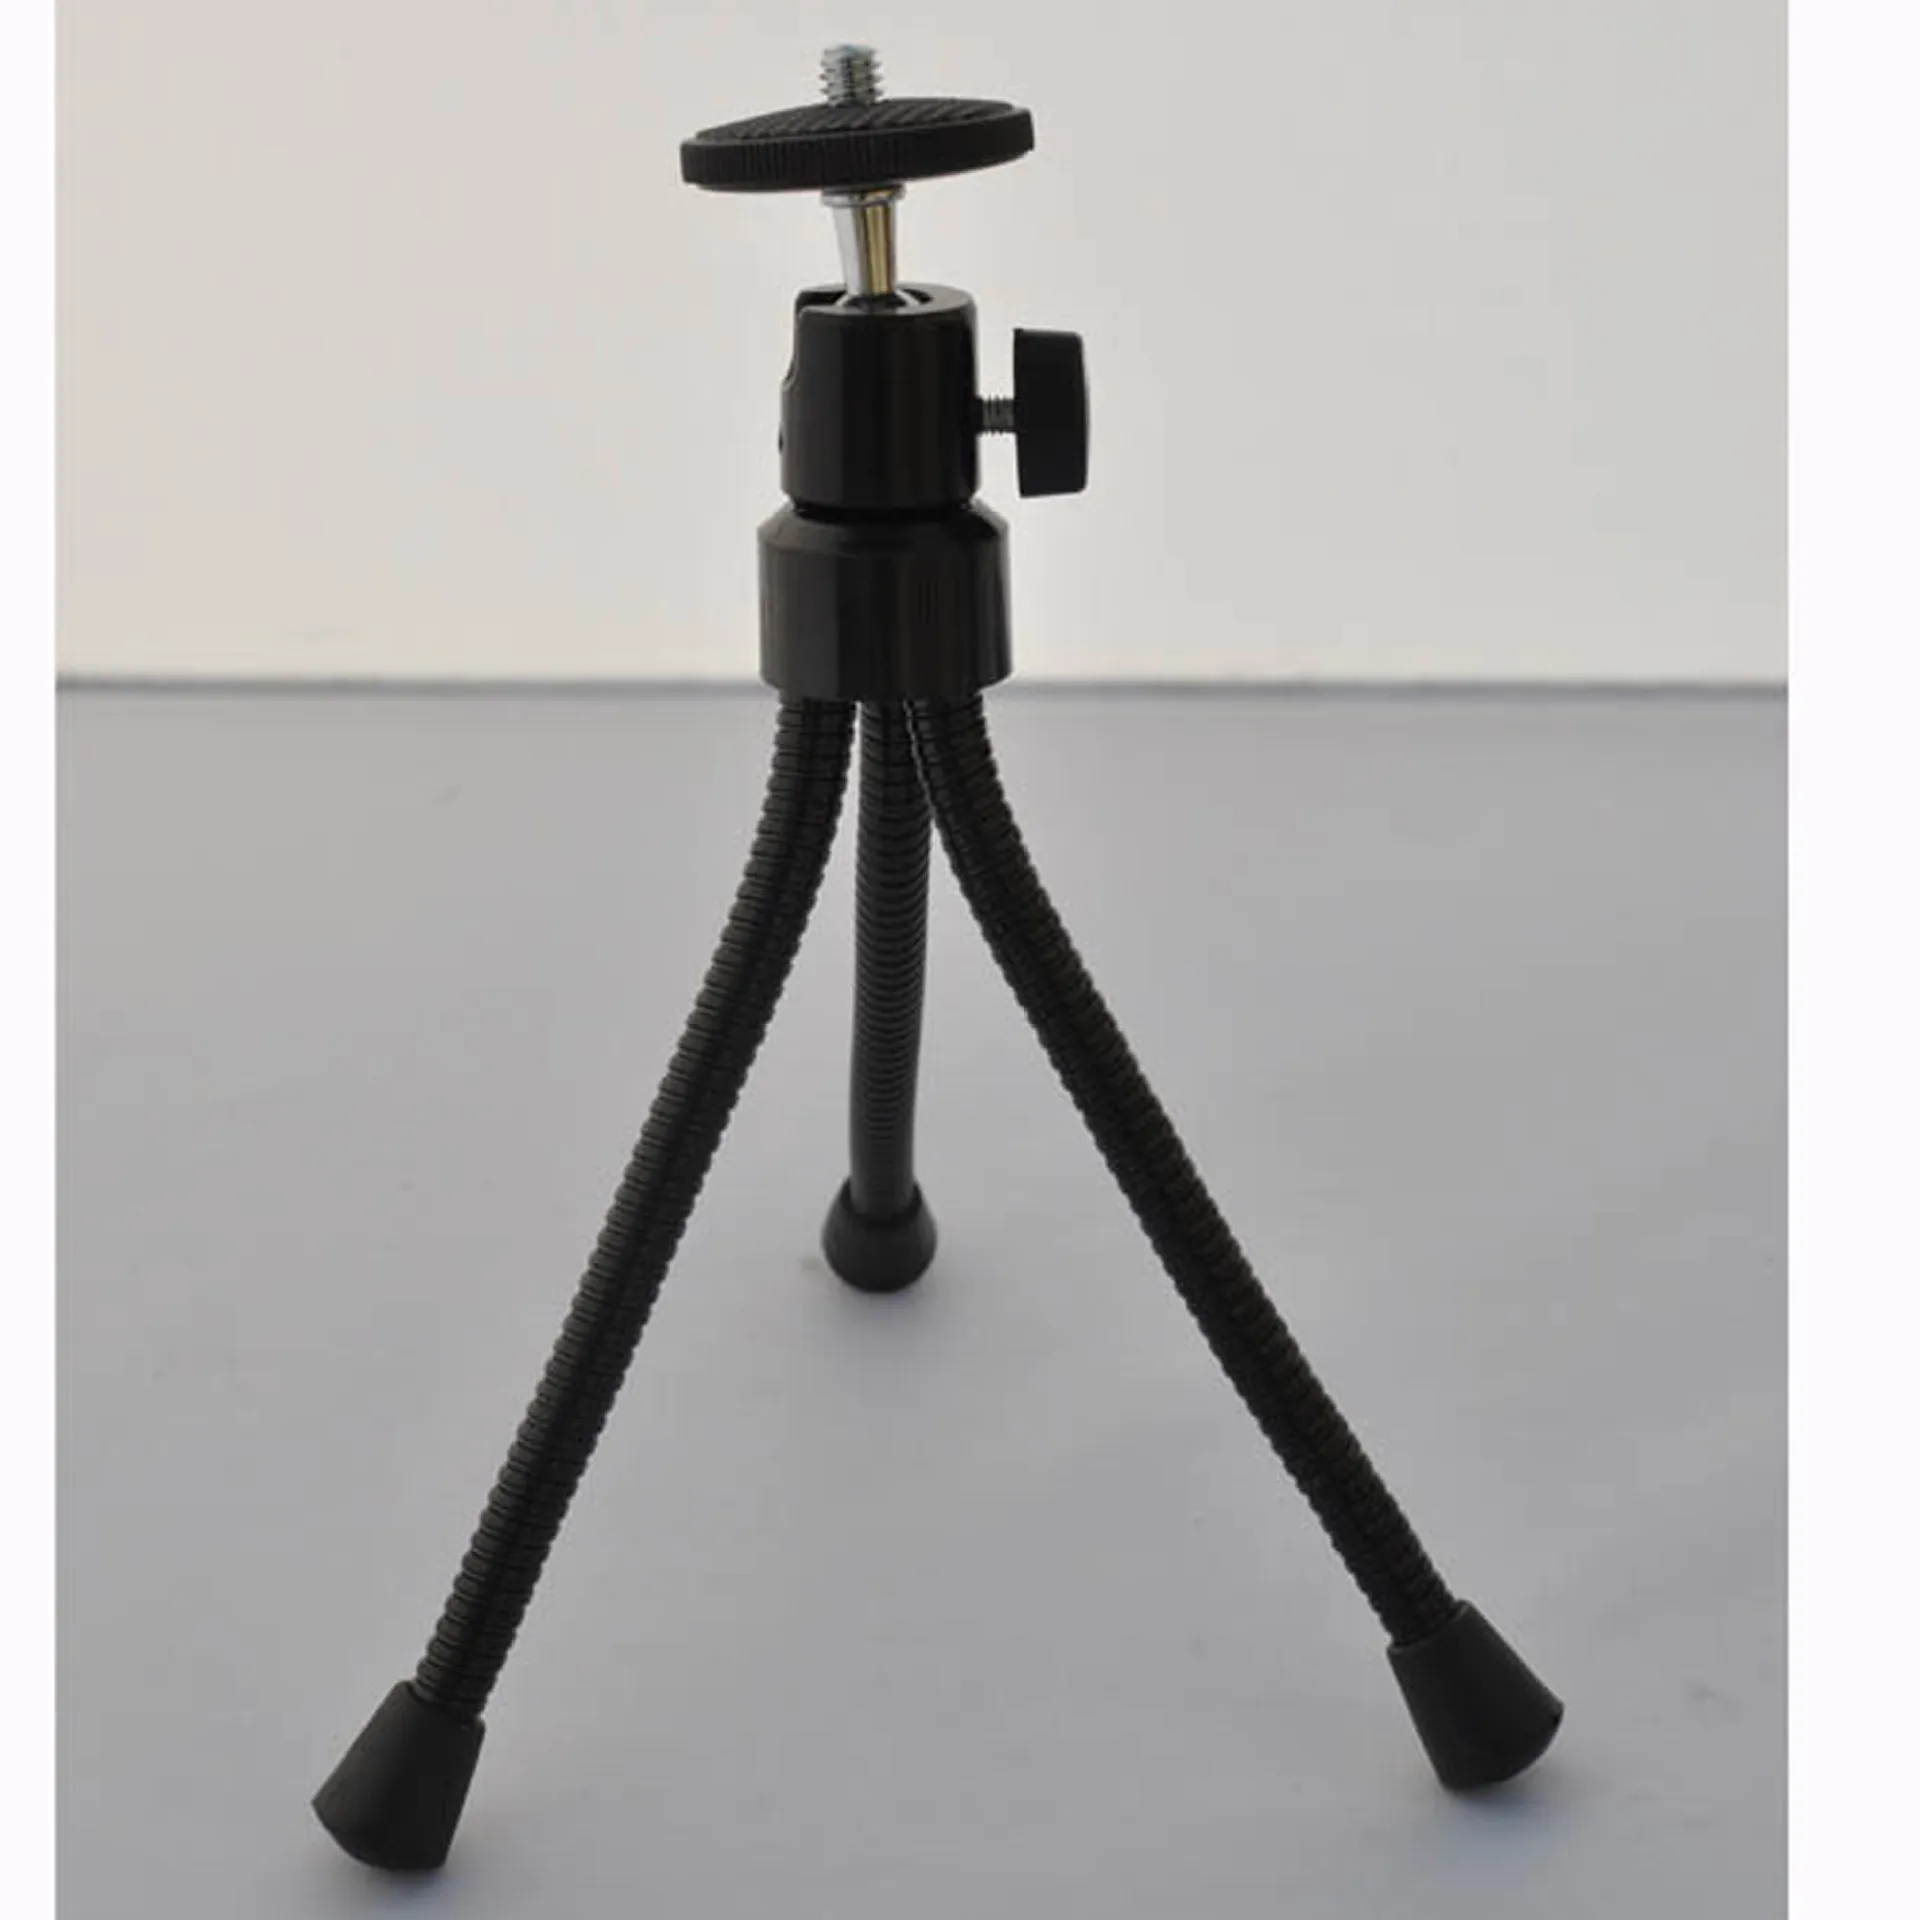 for digital camera or webcamtripods atw mini tripod flexible